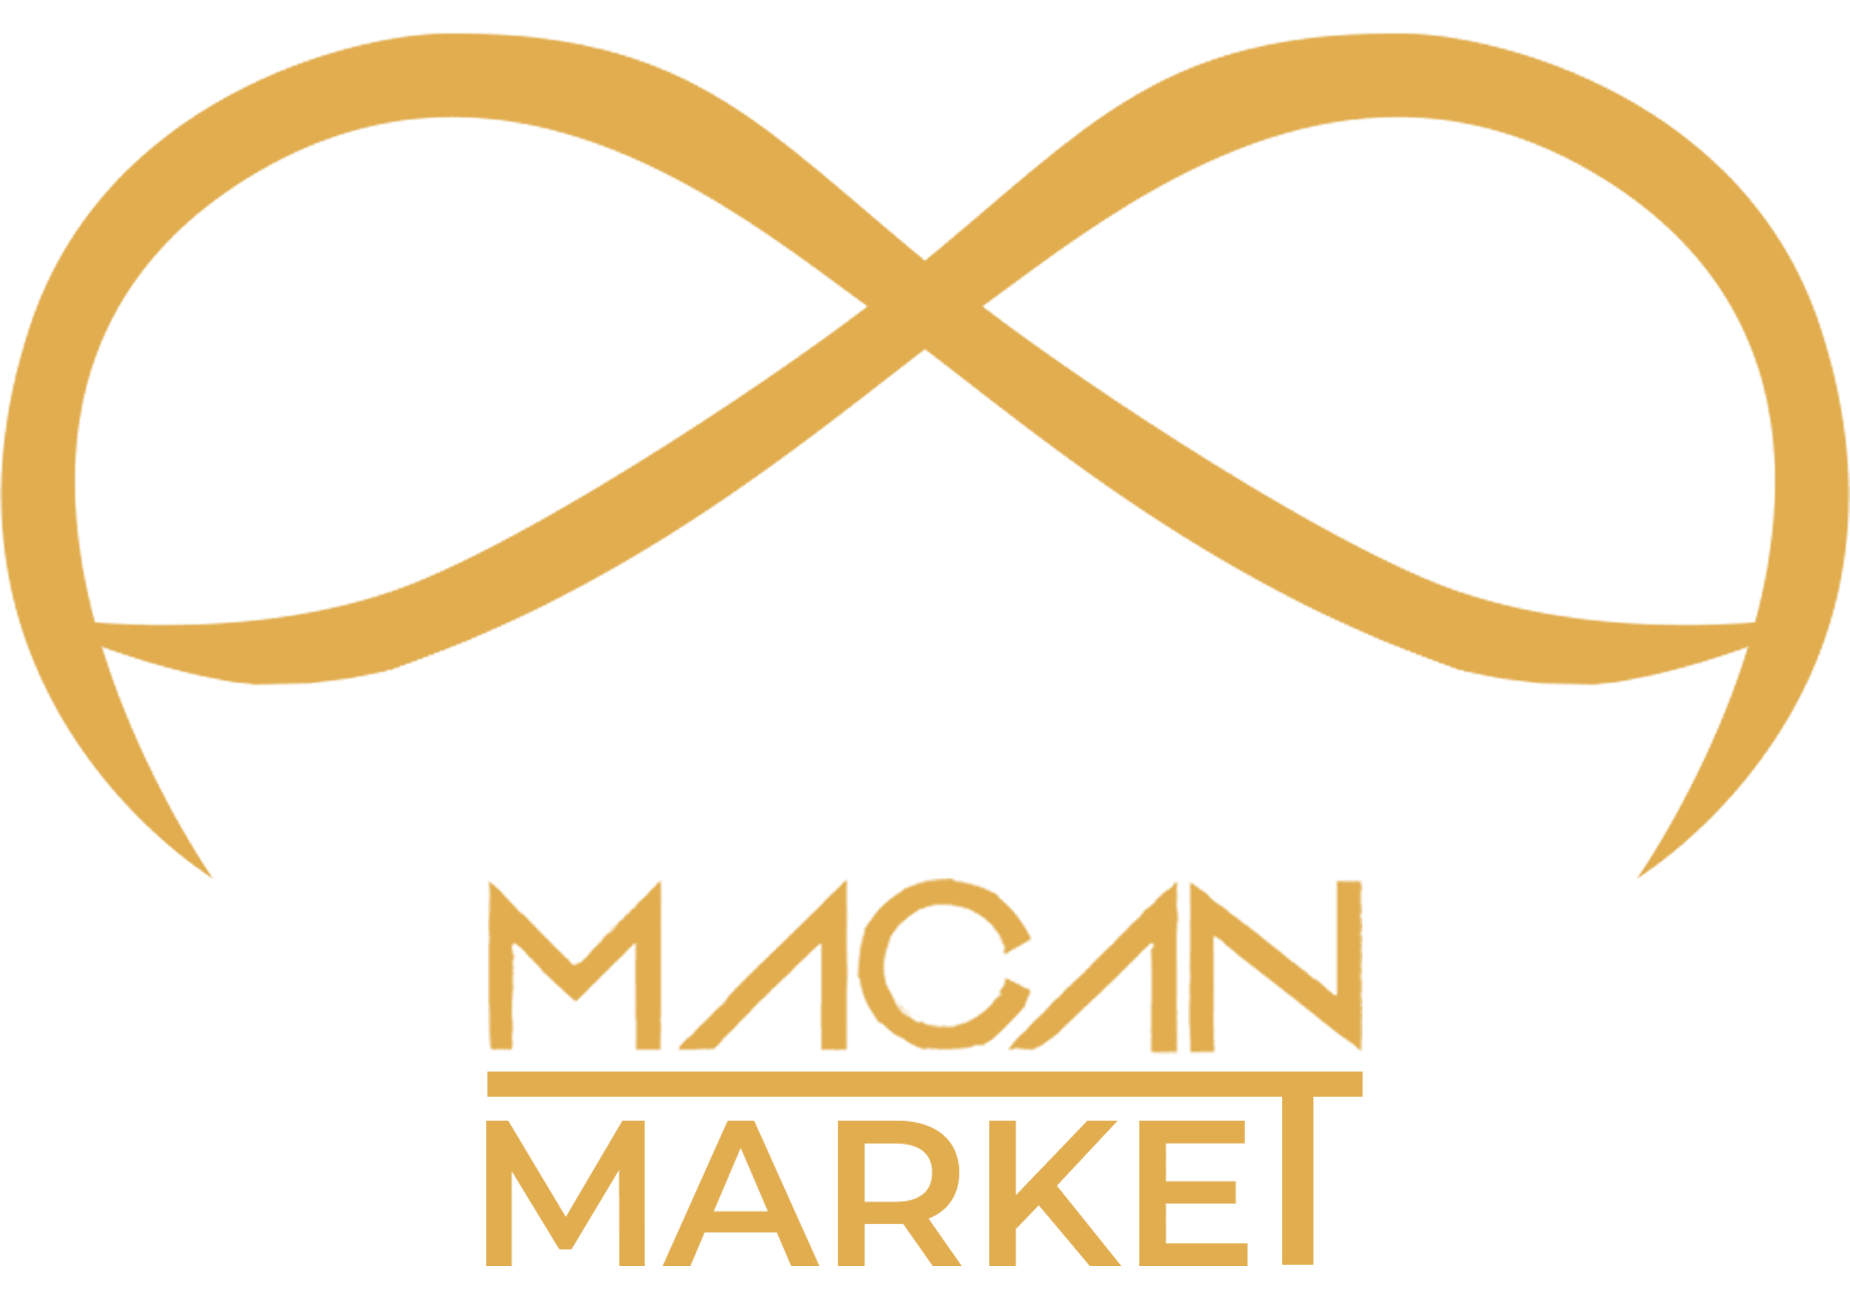 Macan Market logo